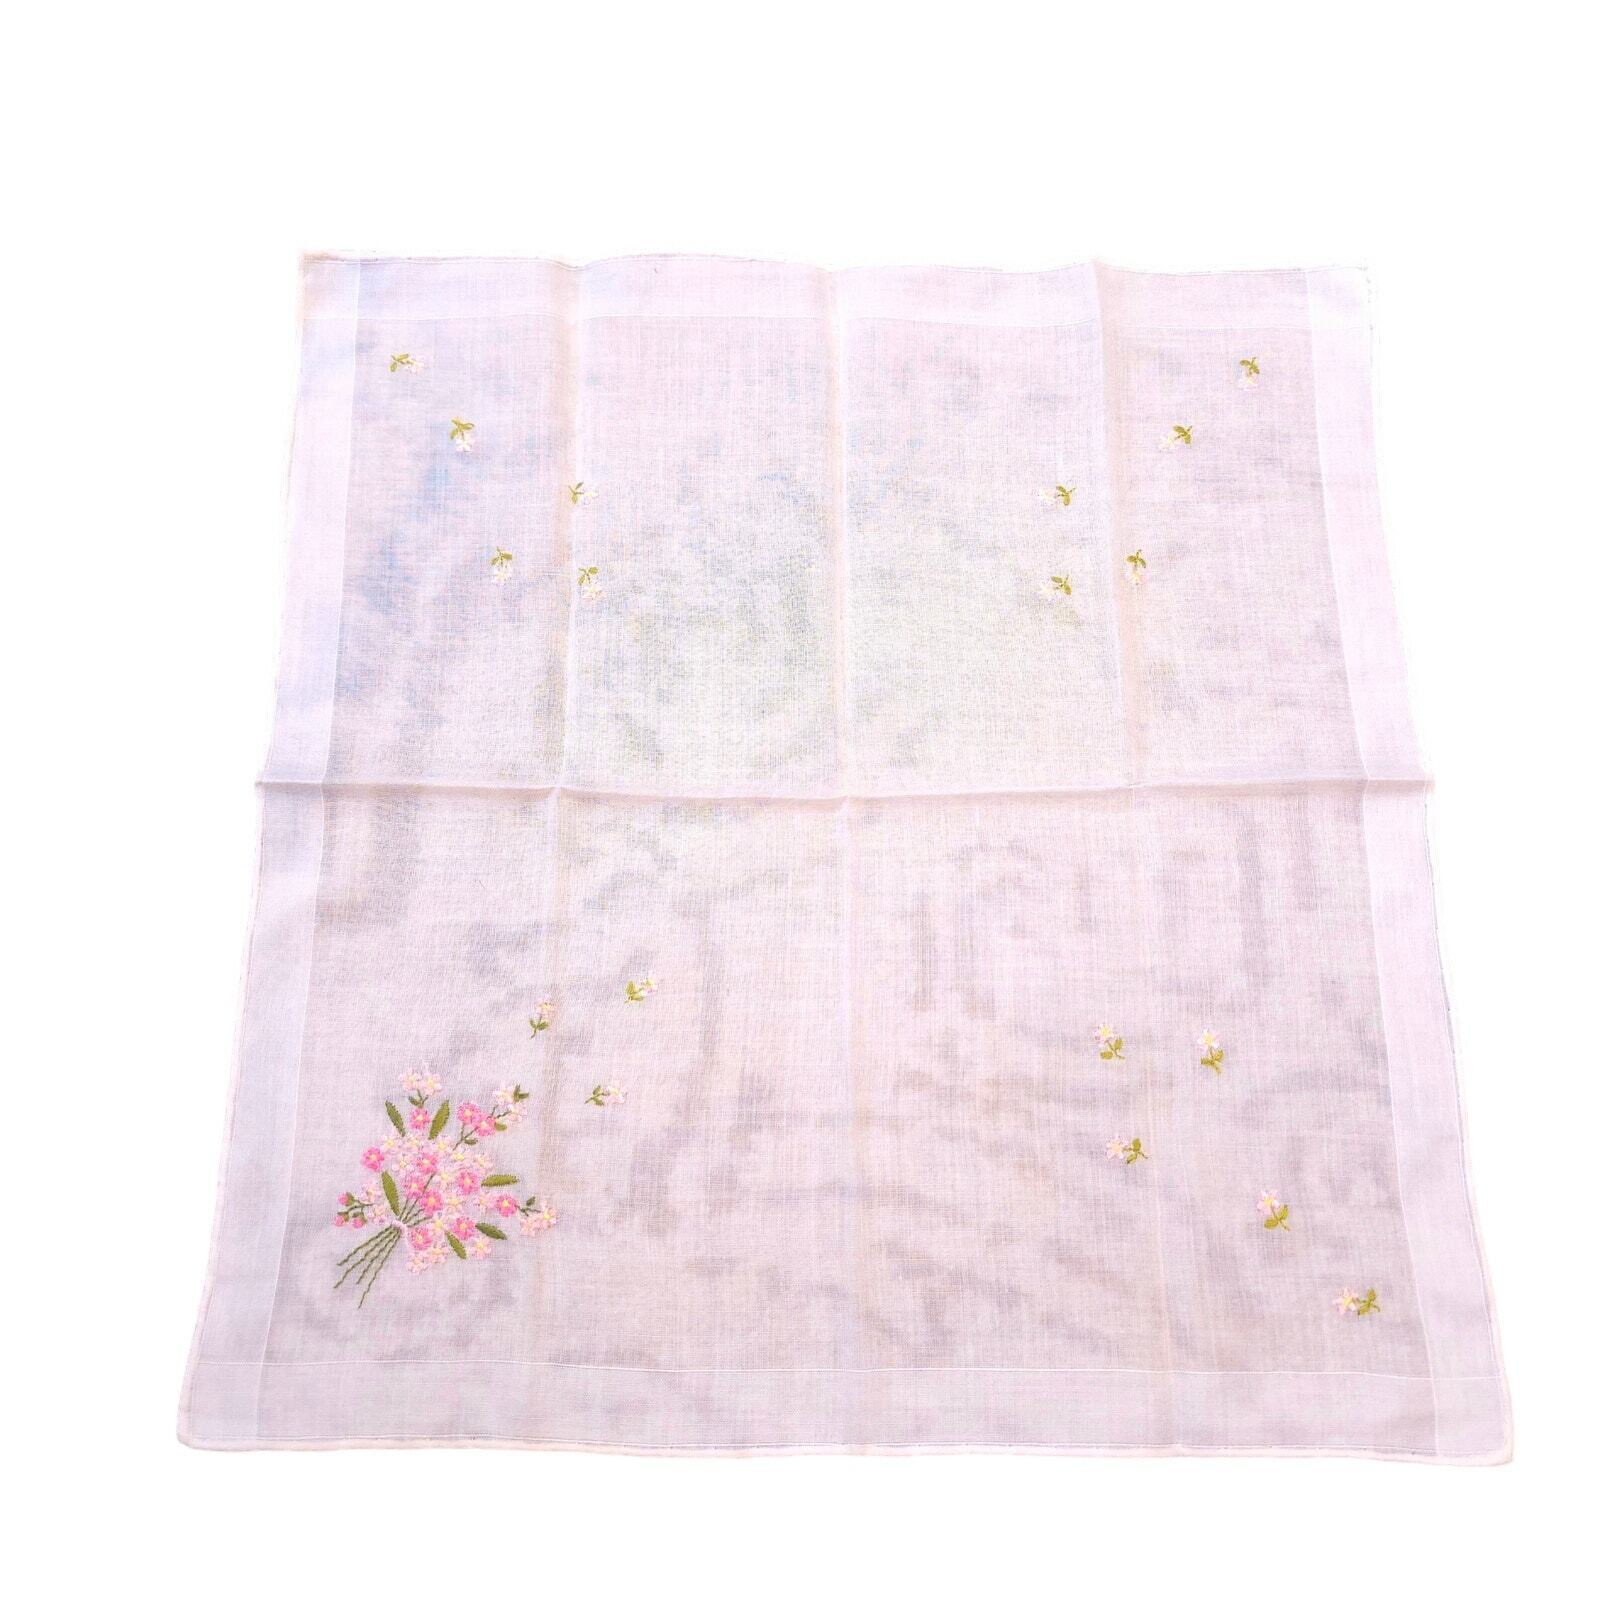 Vintage Handmade Floral Pink Embroidered Handkerchief White